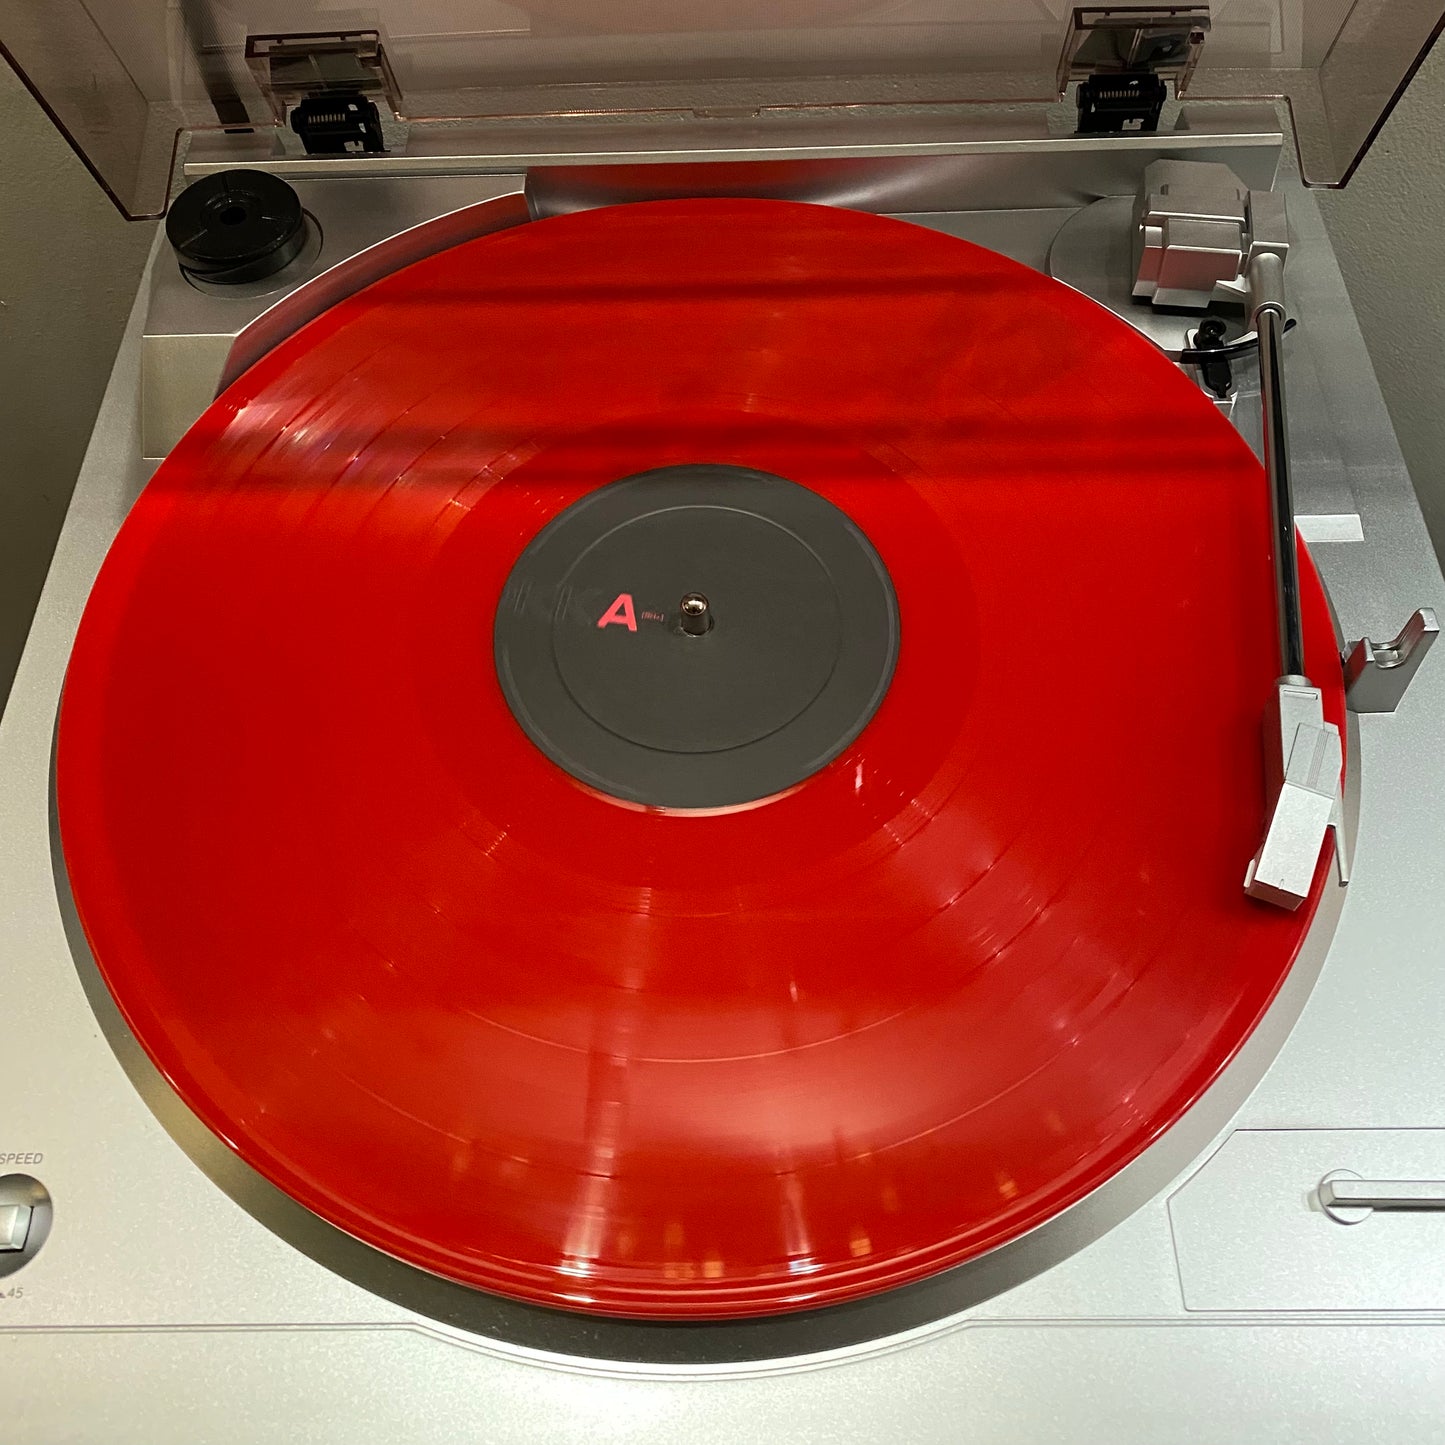 BOKKA Blood Moon - Red Vinyl LP